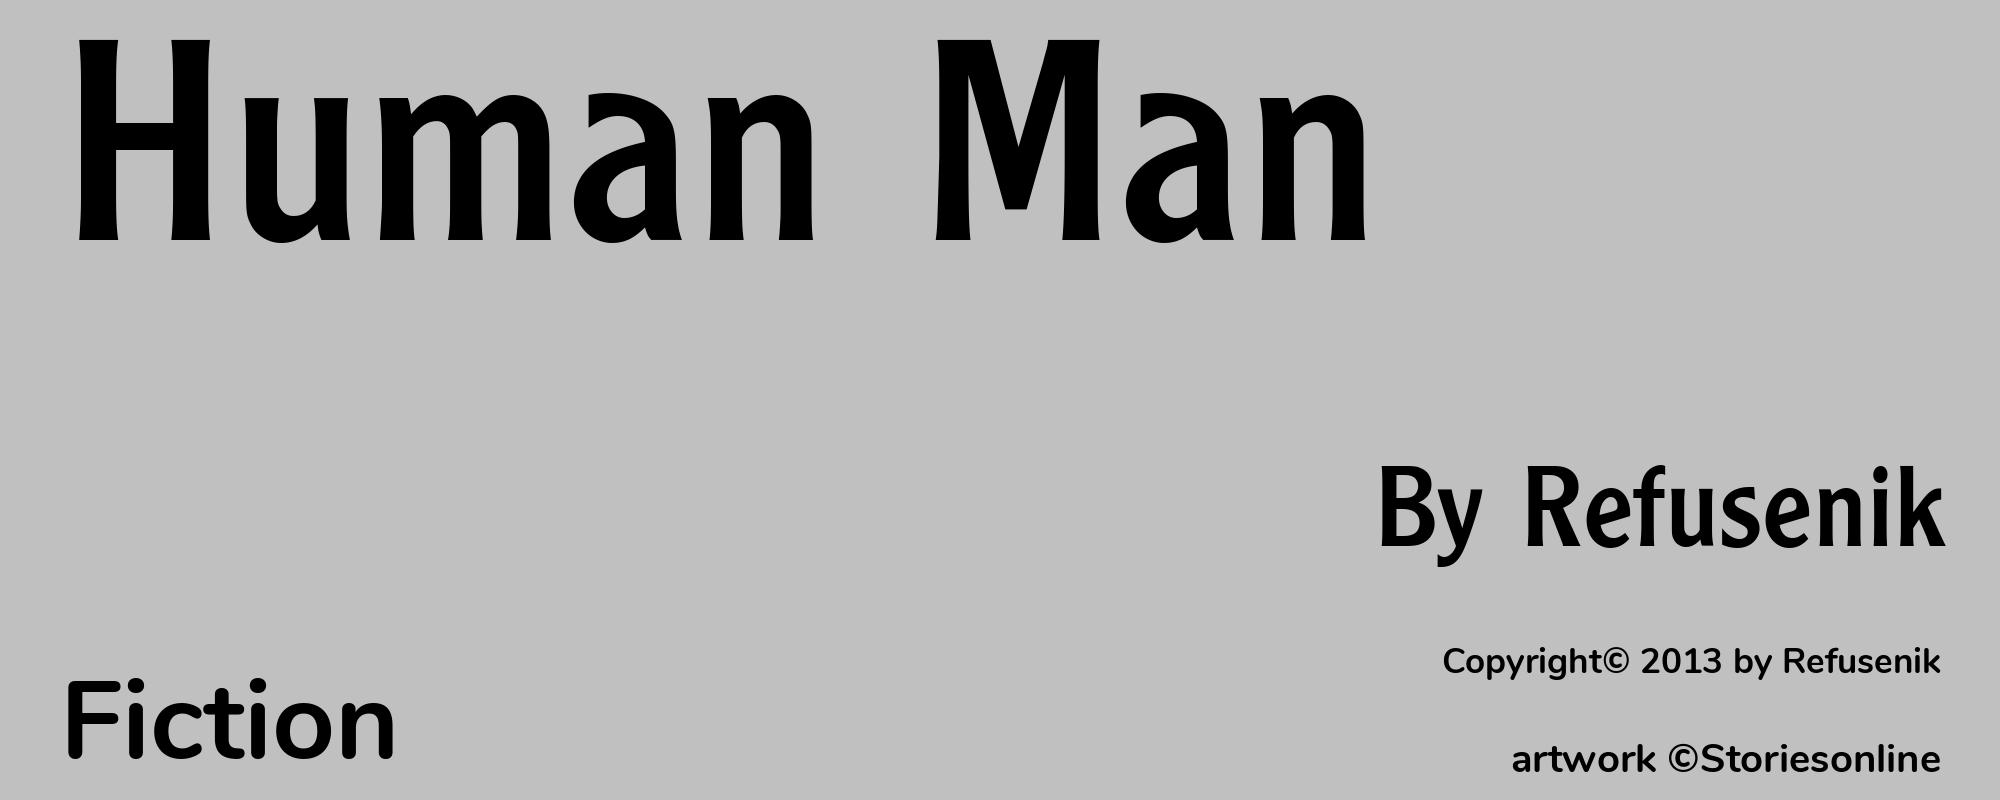 Human Man - Cover